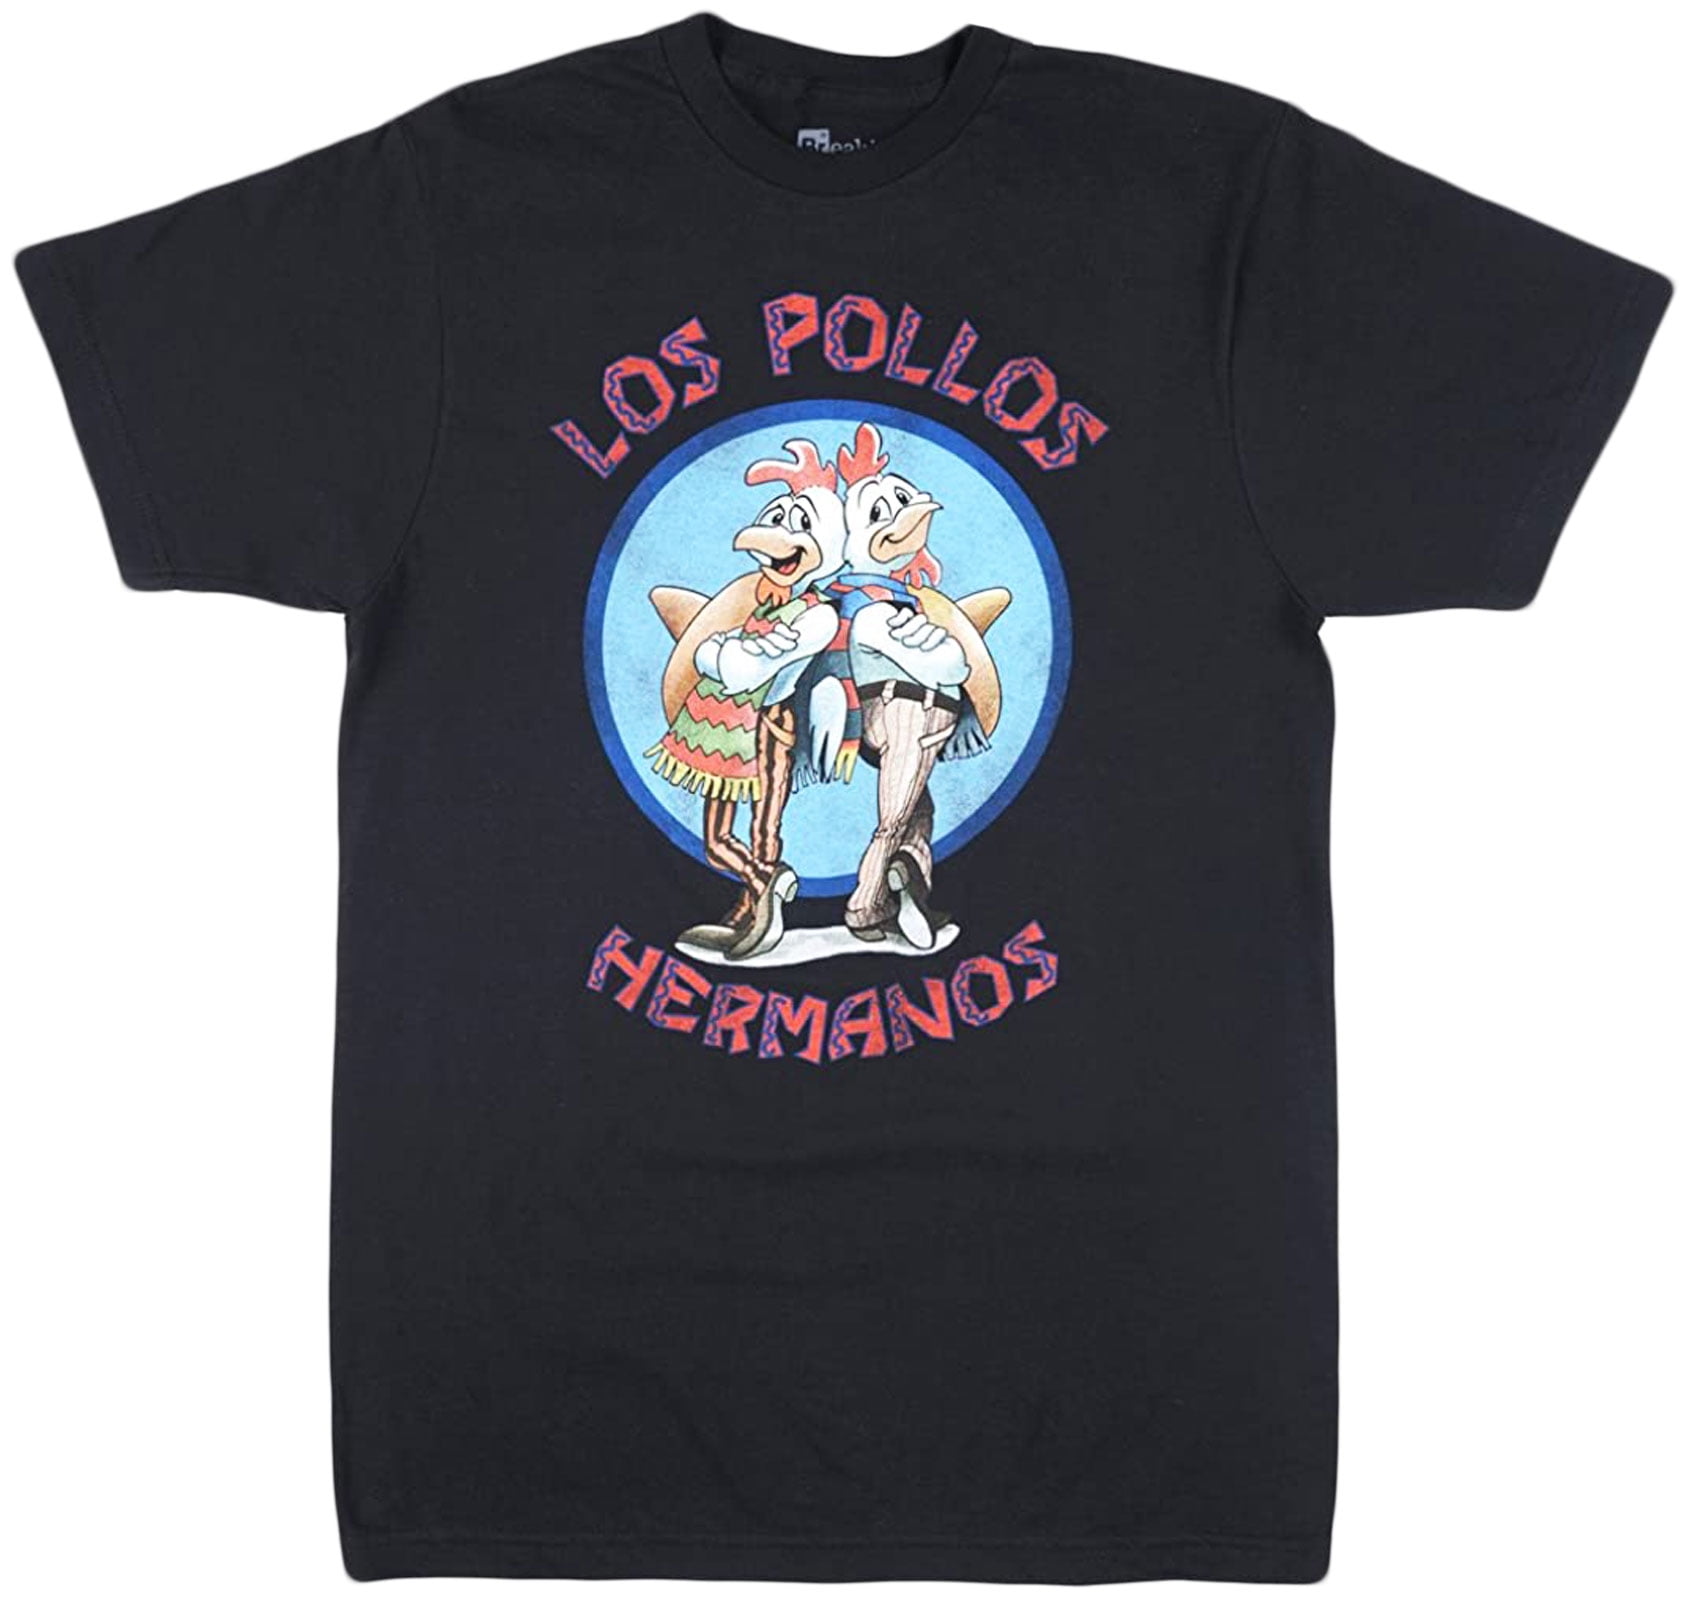 Men's Los Pollos T-Shirt, Black, Large -